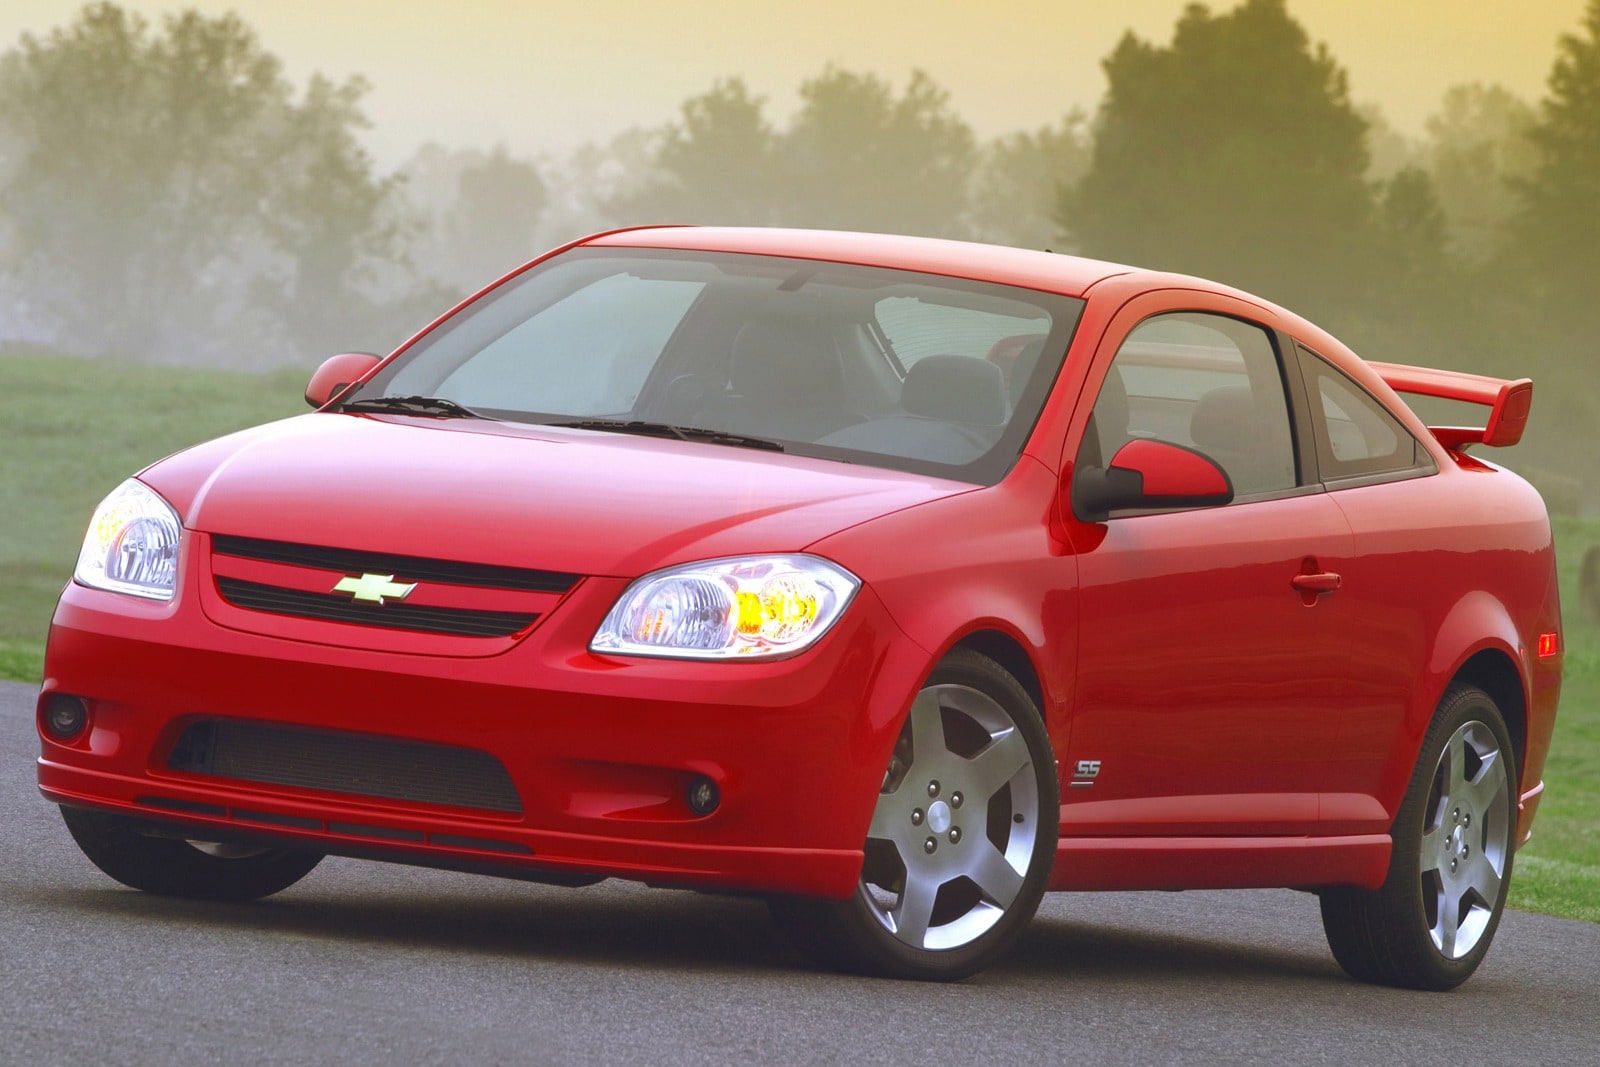 Used 2007 Chevrolet Cobalt SS Review | Edmunds